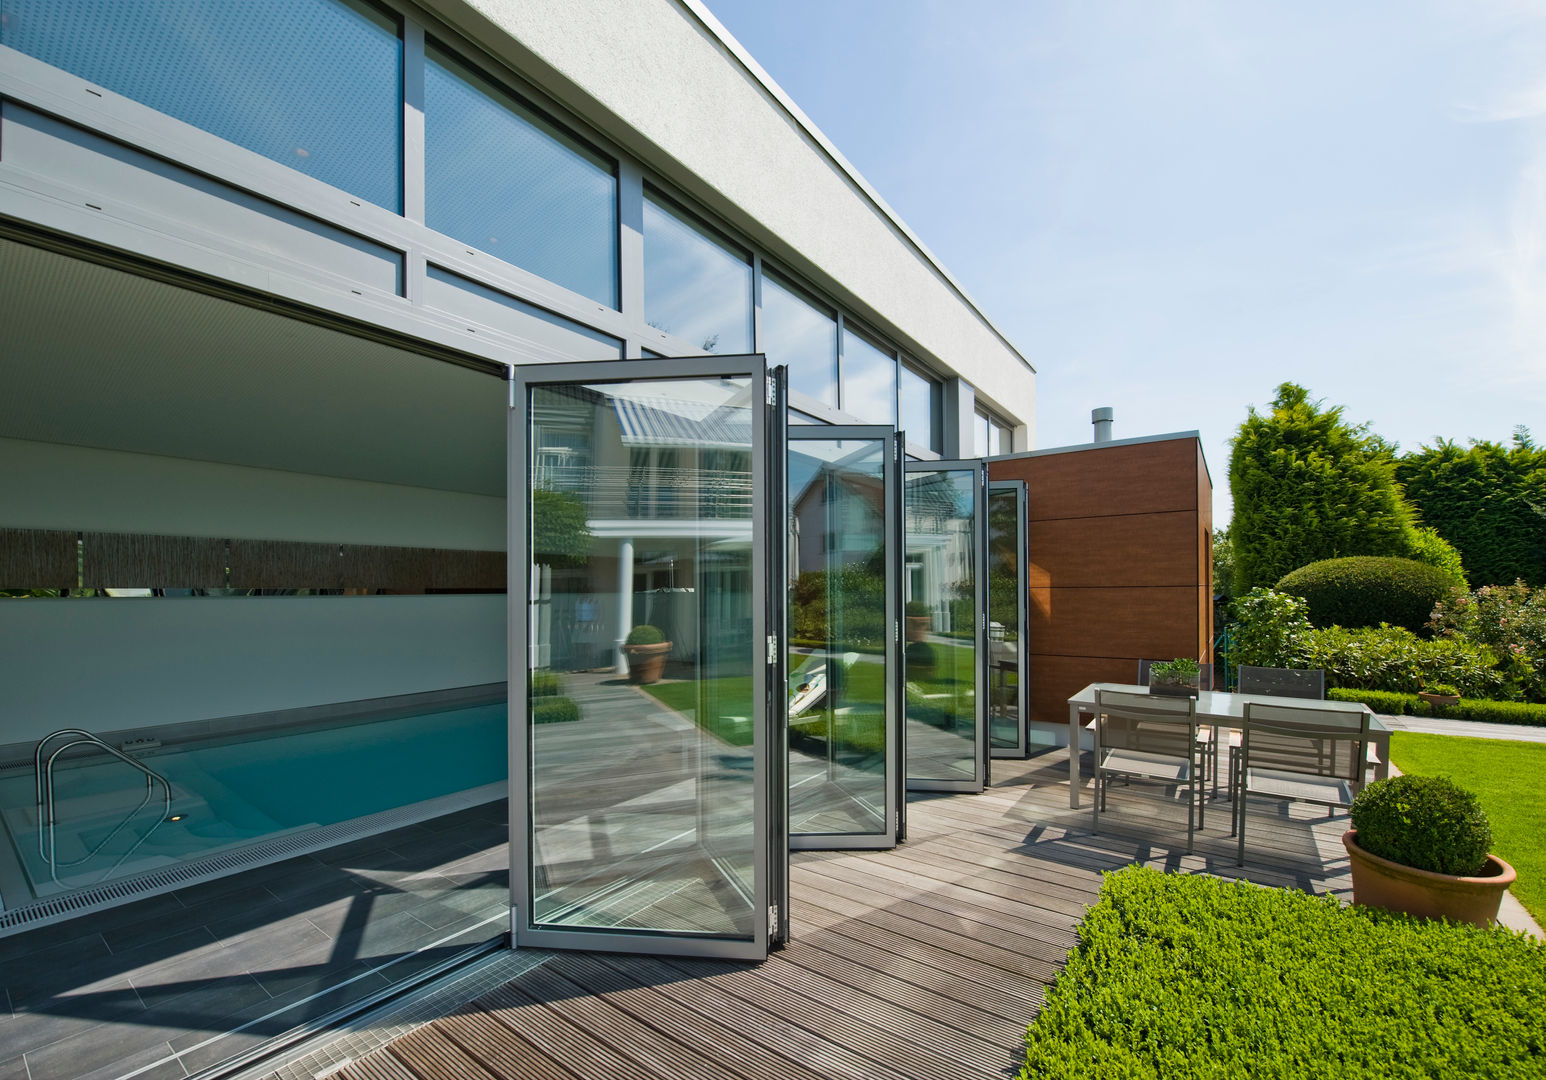 Glas-Faltwand Poolverglasung, Solarlux GmbH Solarlux GmbH Modern pool